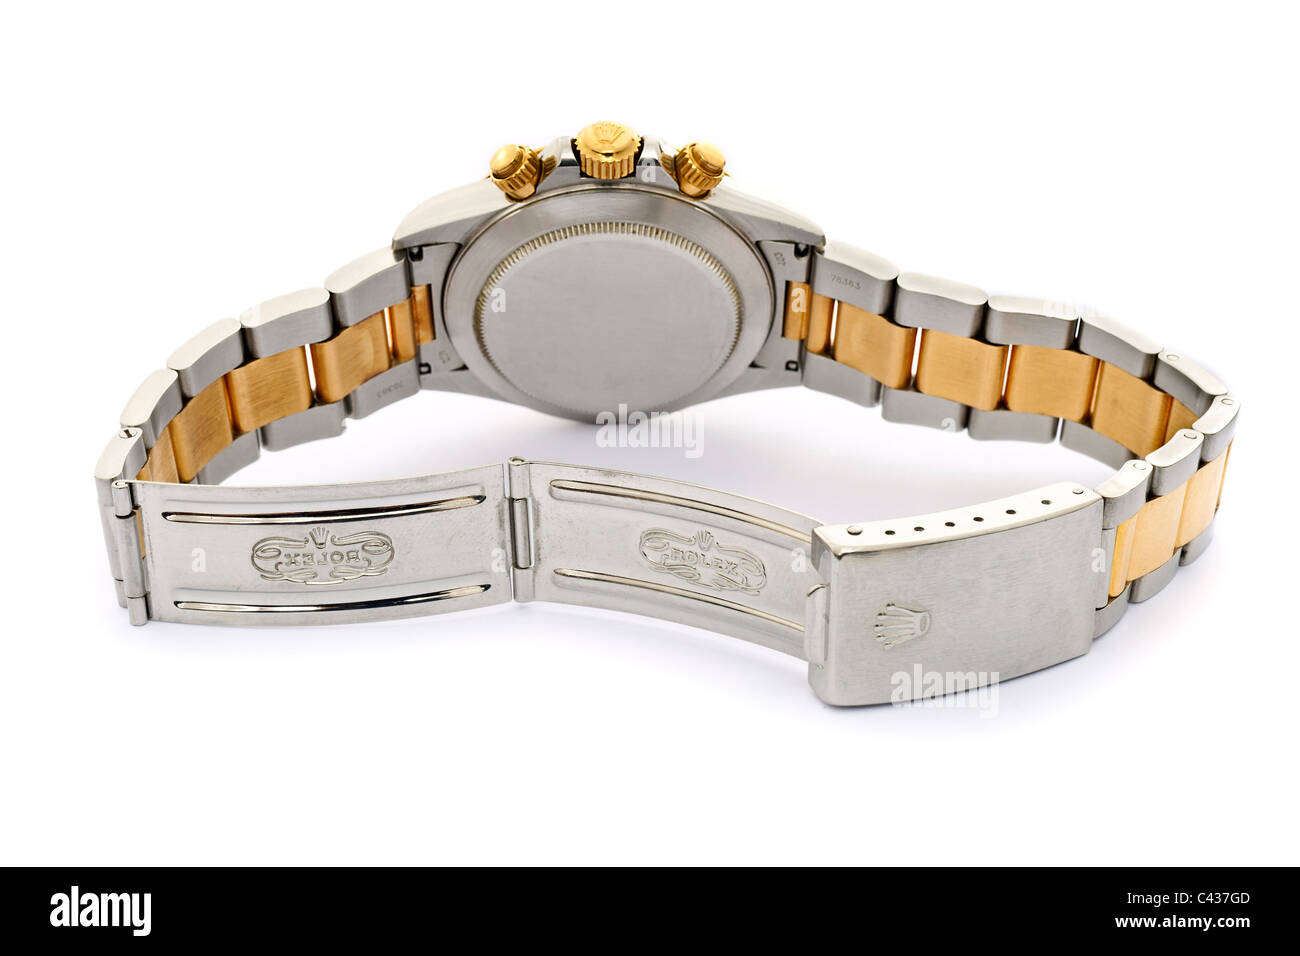 Rolex Daytona Cosmograph Oyster Perpetual Chronometer 18k Gold und Stahl Swiss Chronograph Armbanduhr JMH4902 Stockfoto